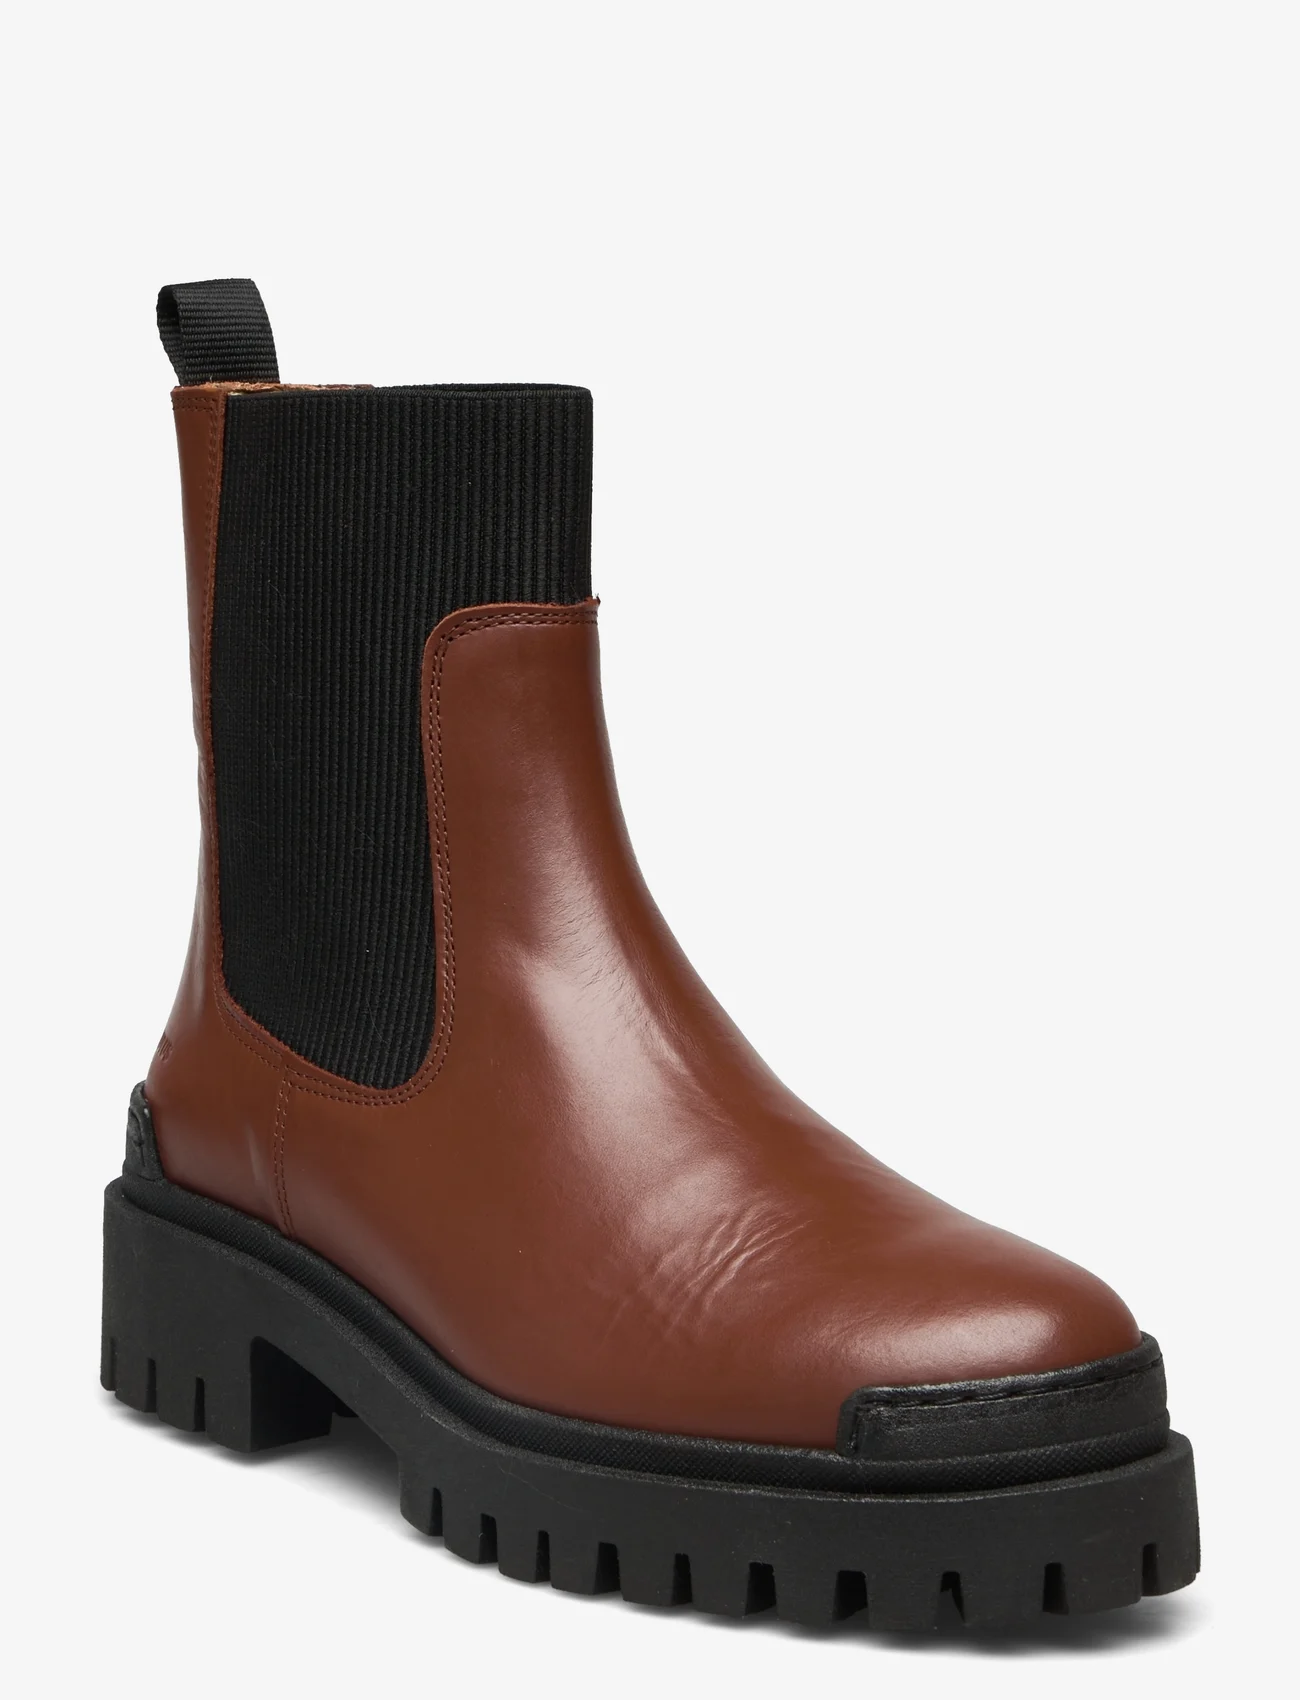 ANGULUS - Boots - flat - chelsea stila zābaki - 1705/019 terracotta/black - 0